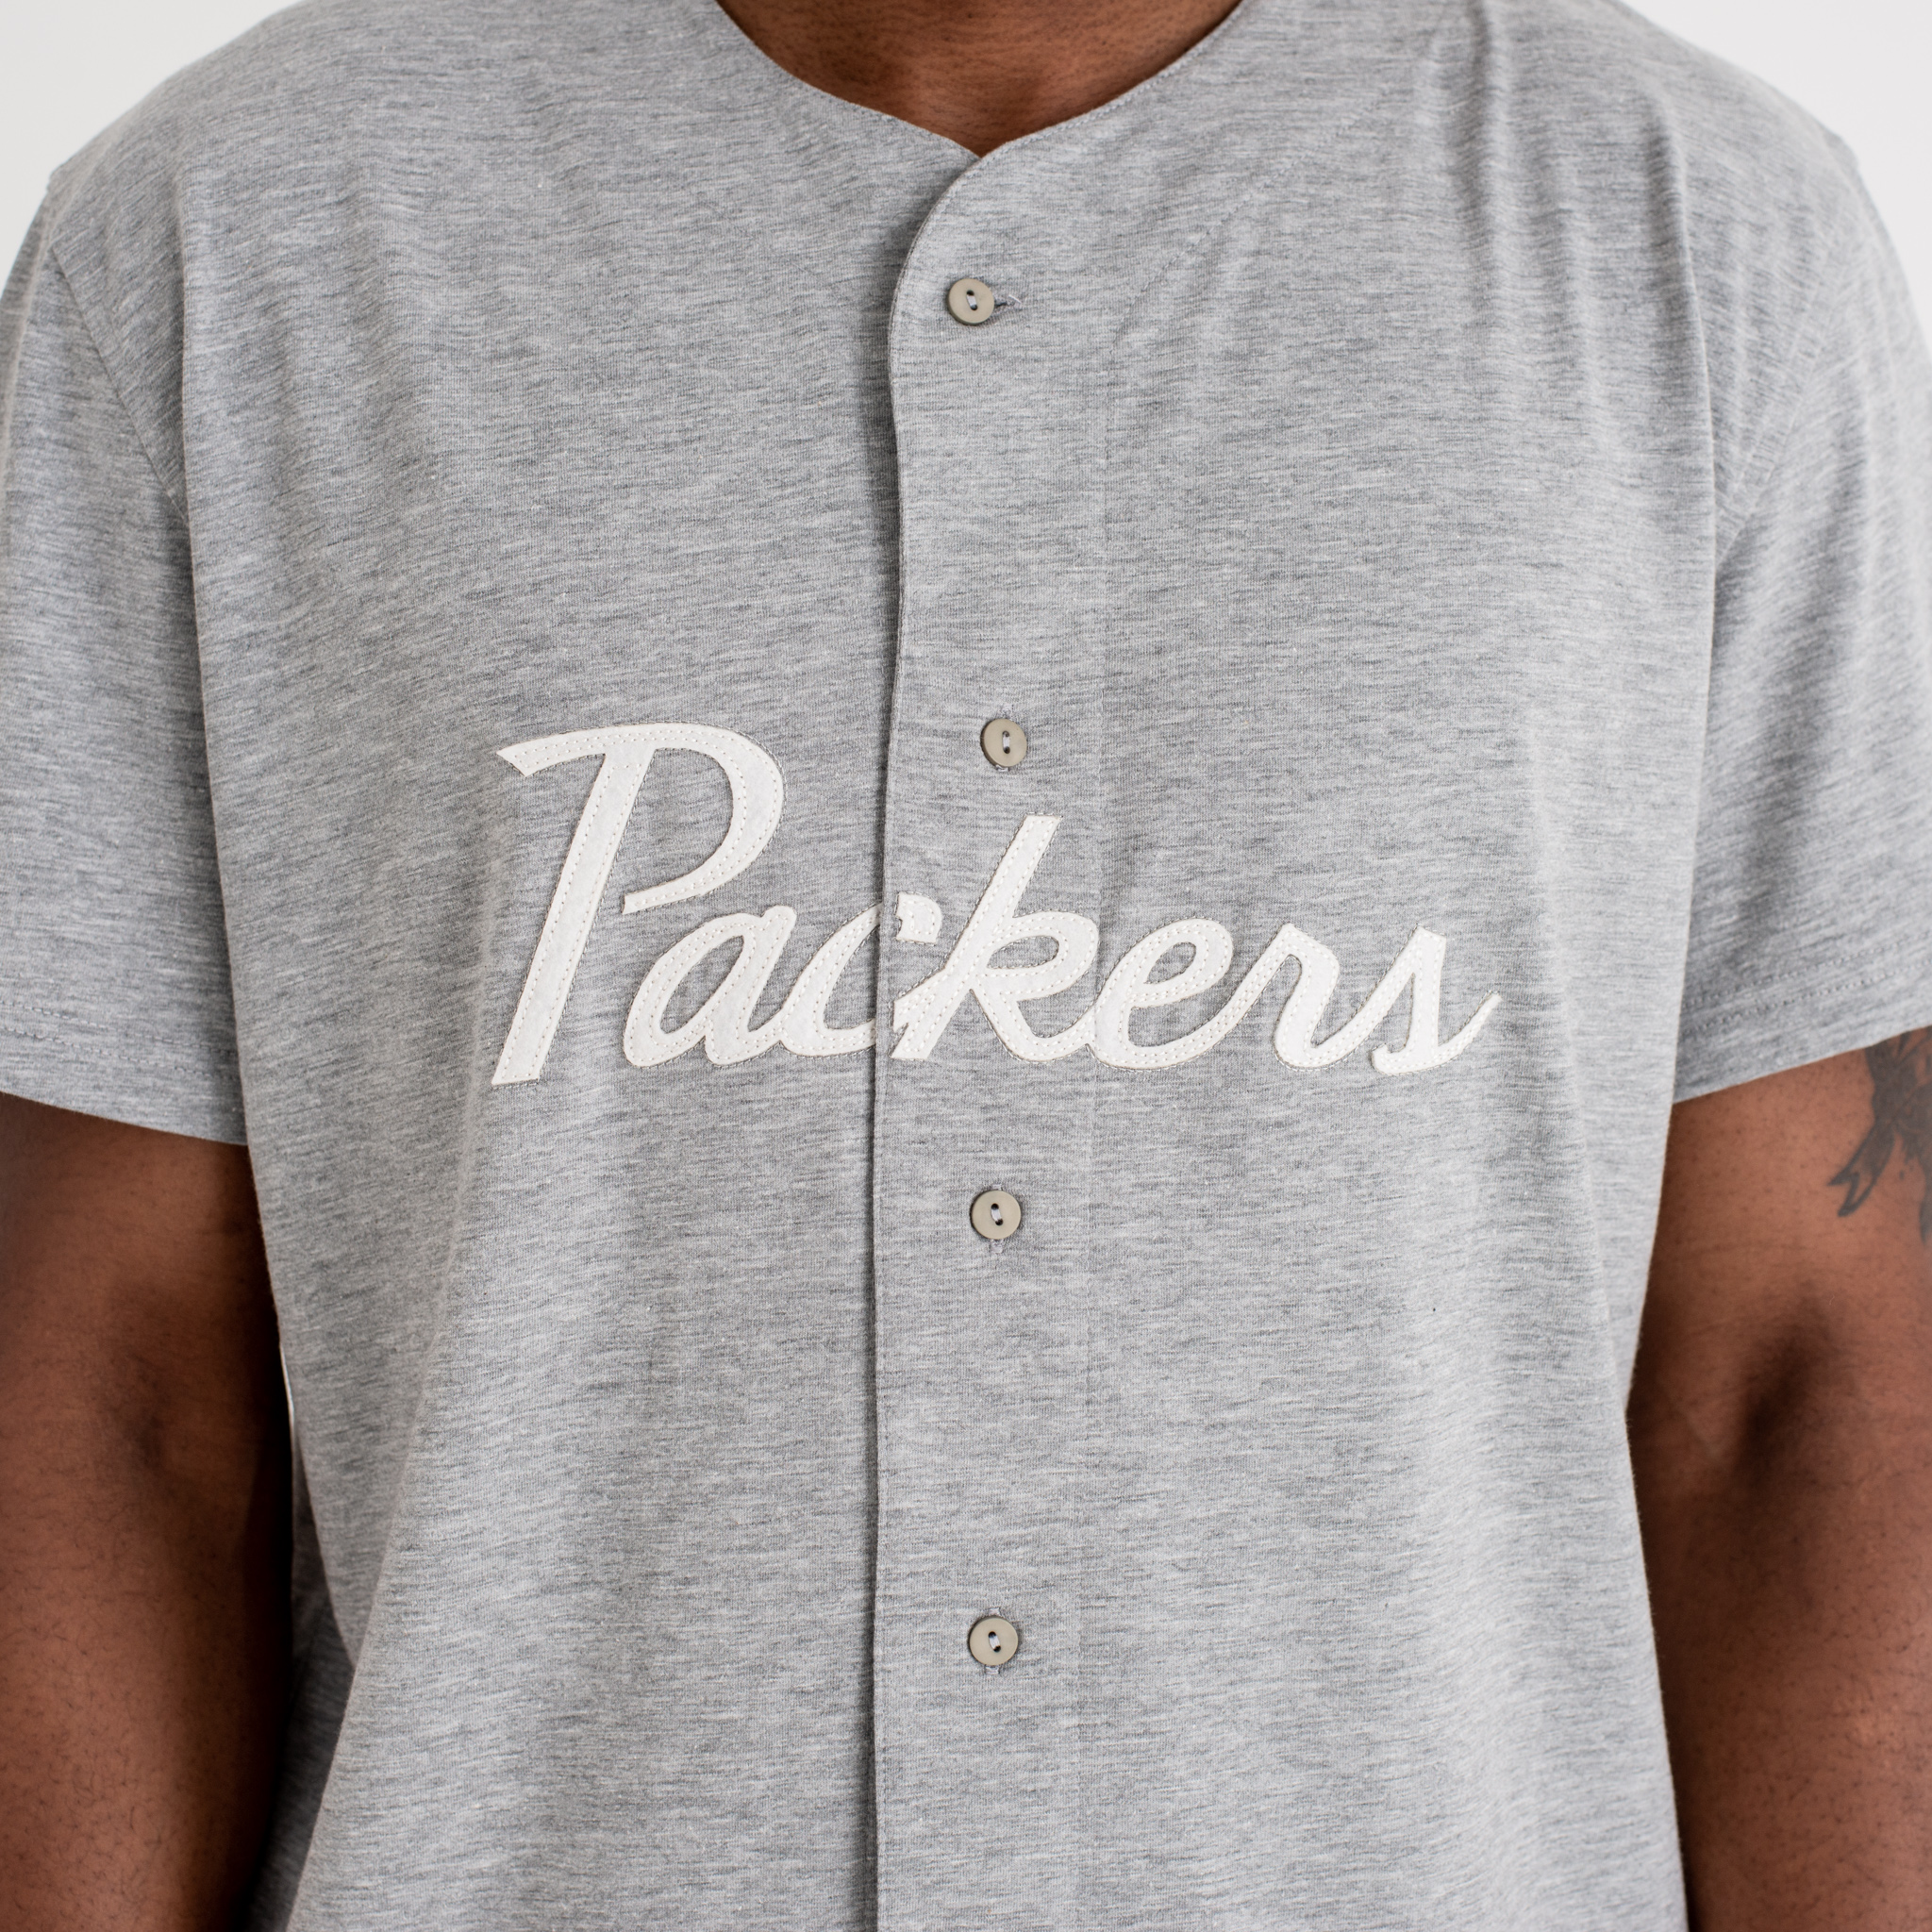 Green Bay Packers – T-Shirt mit Knopfverschluss und Schriftzug